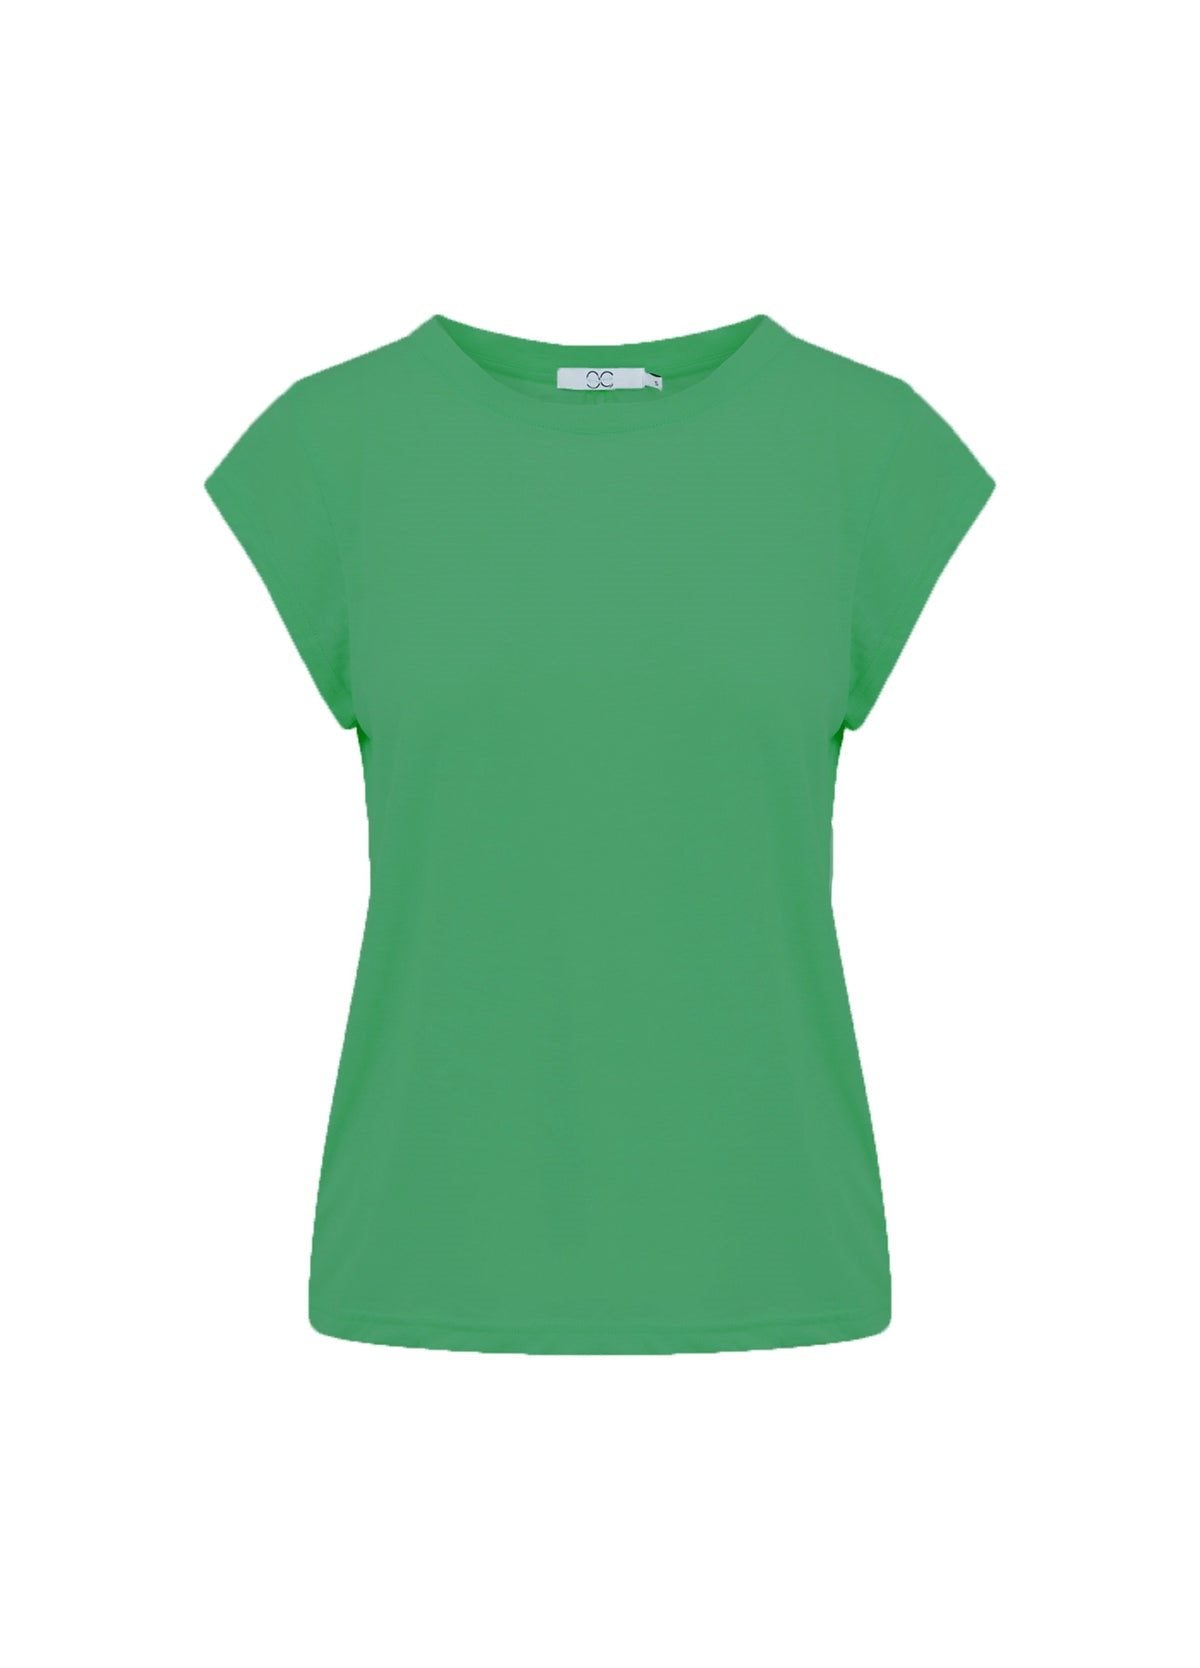 shirt | CC1100 - emerald green